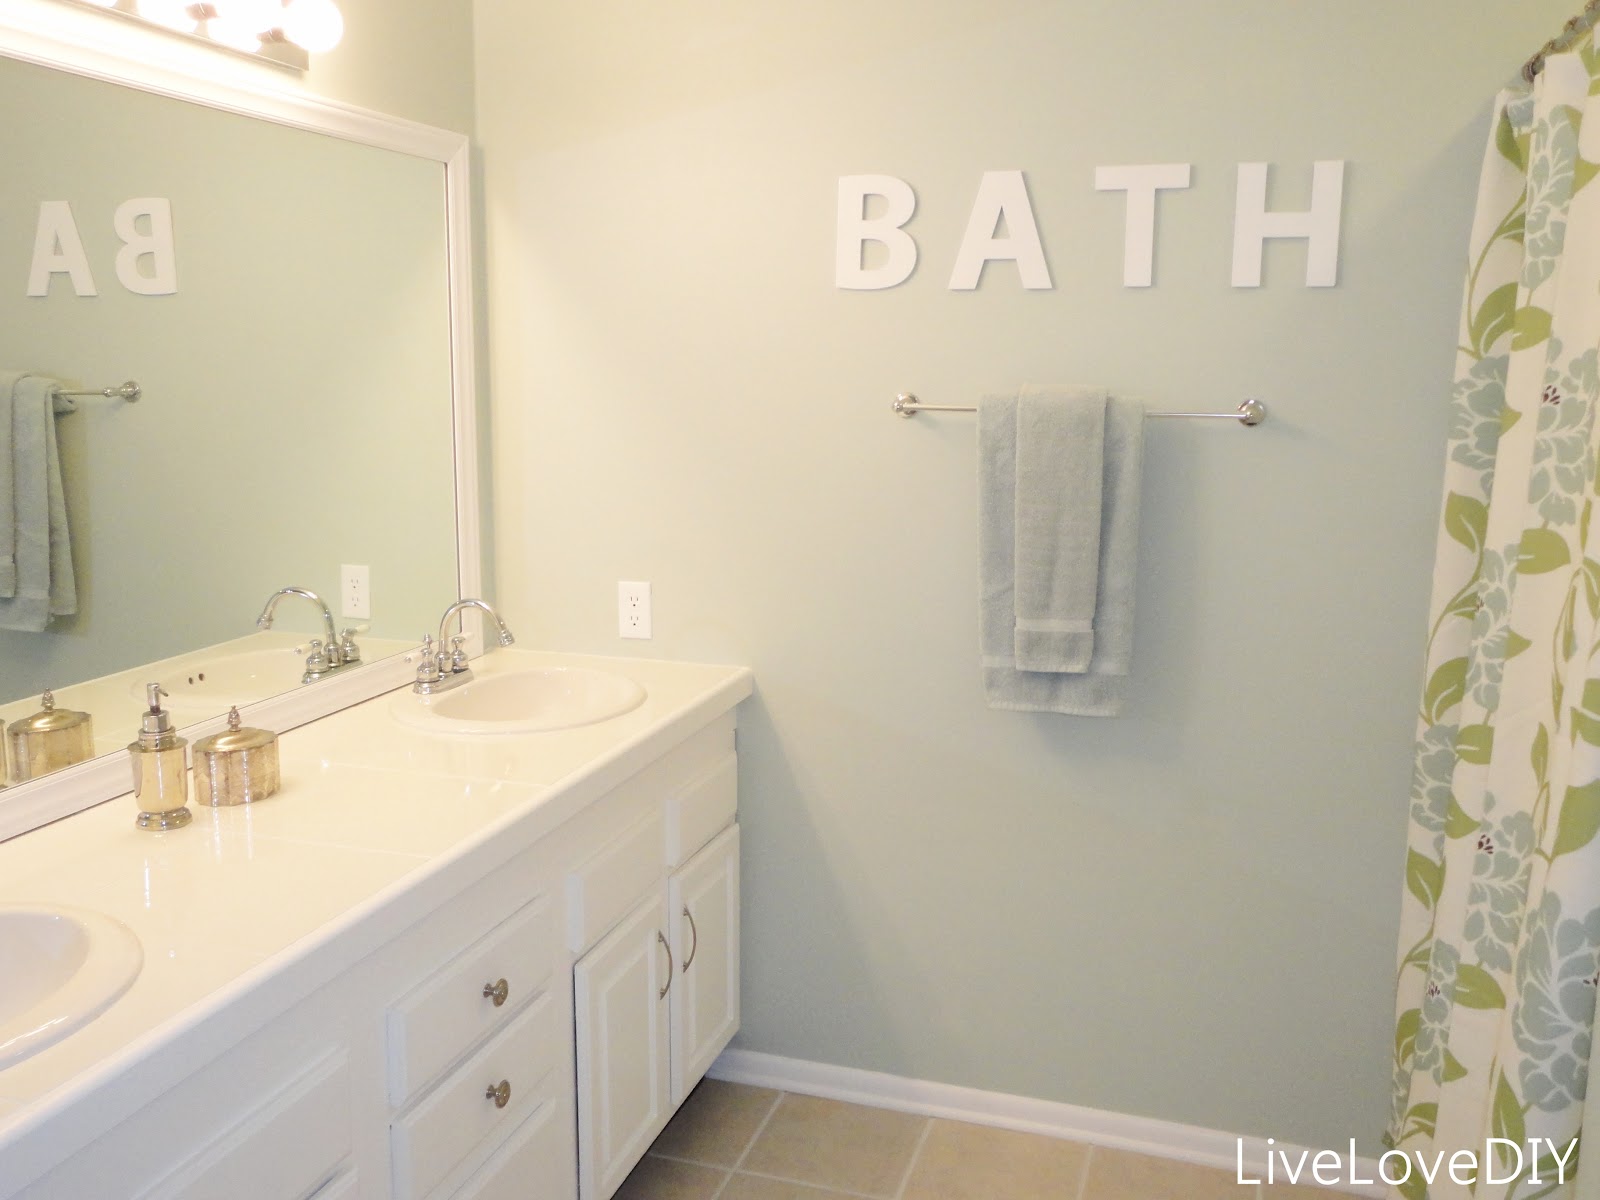 LiveLoveDIY: Easy DIY Ideas for Updating Your Bathroom!